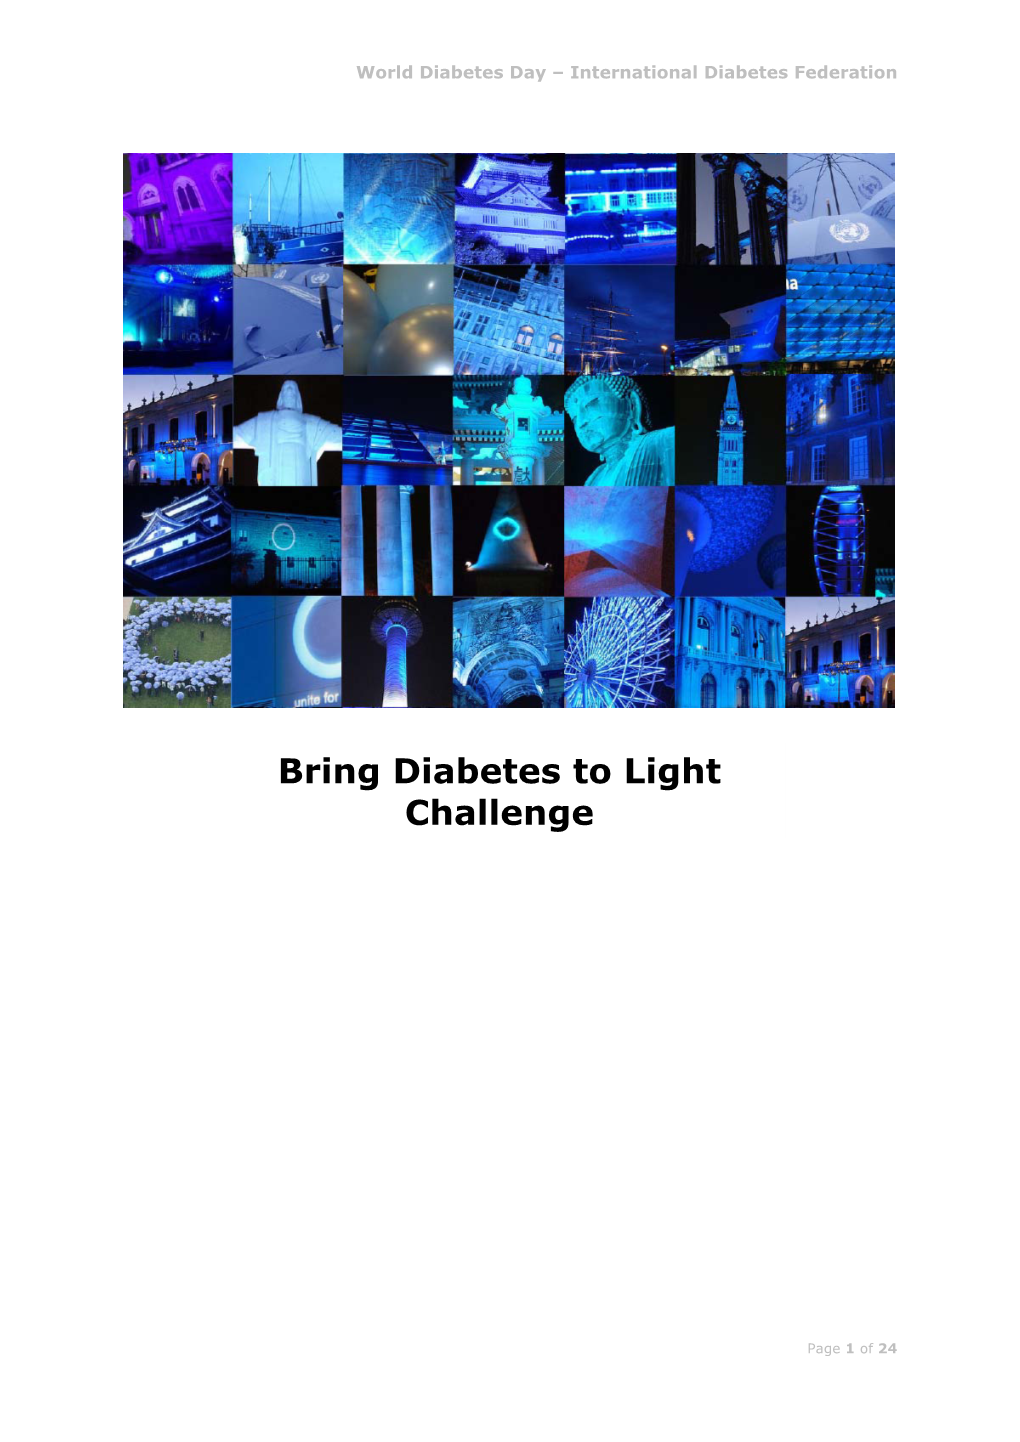 Bring Diabetes to Light Challenge